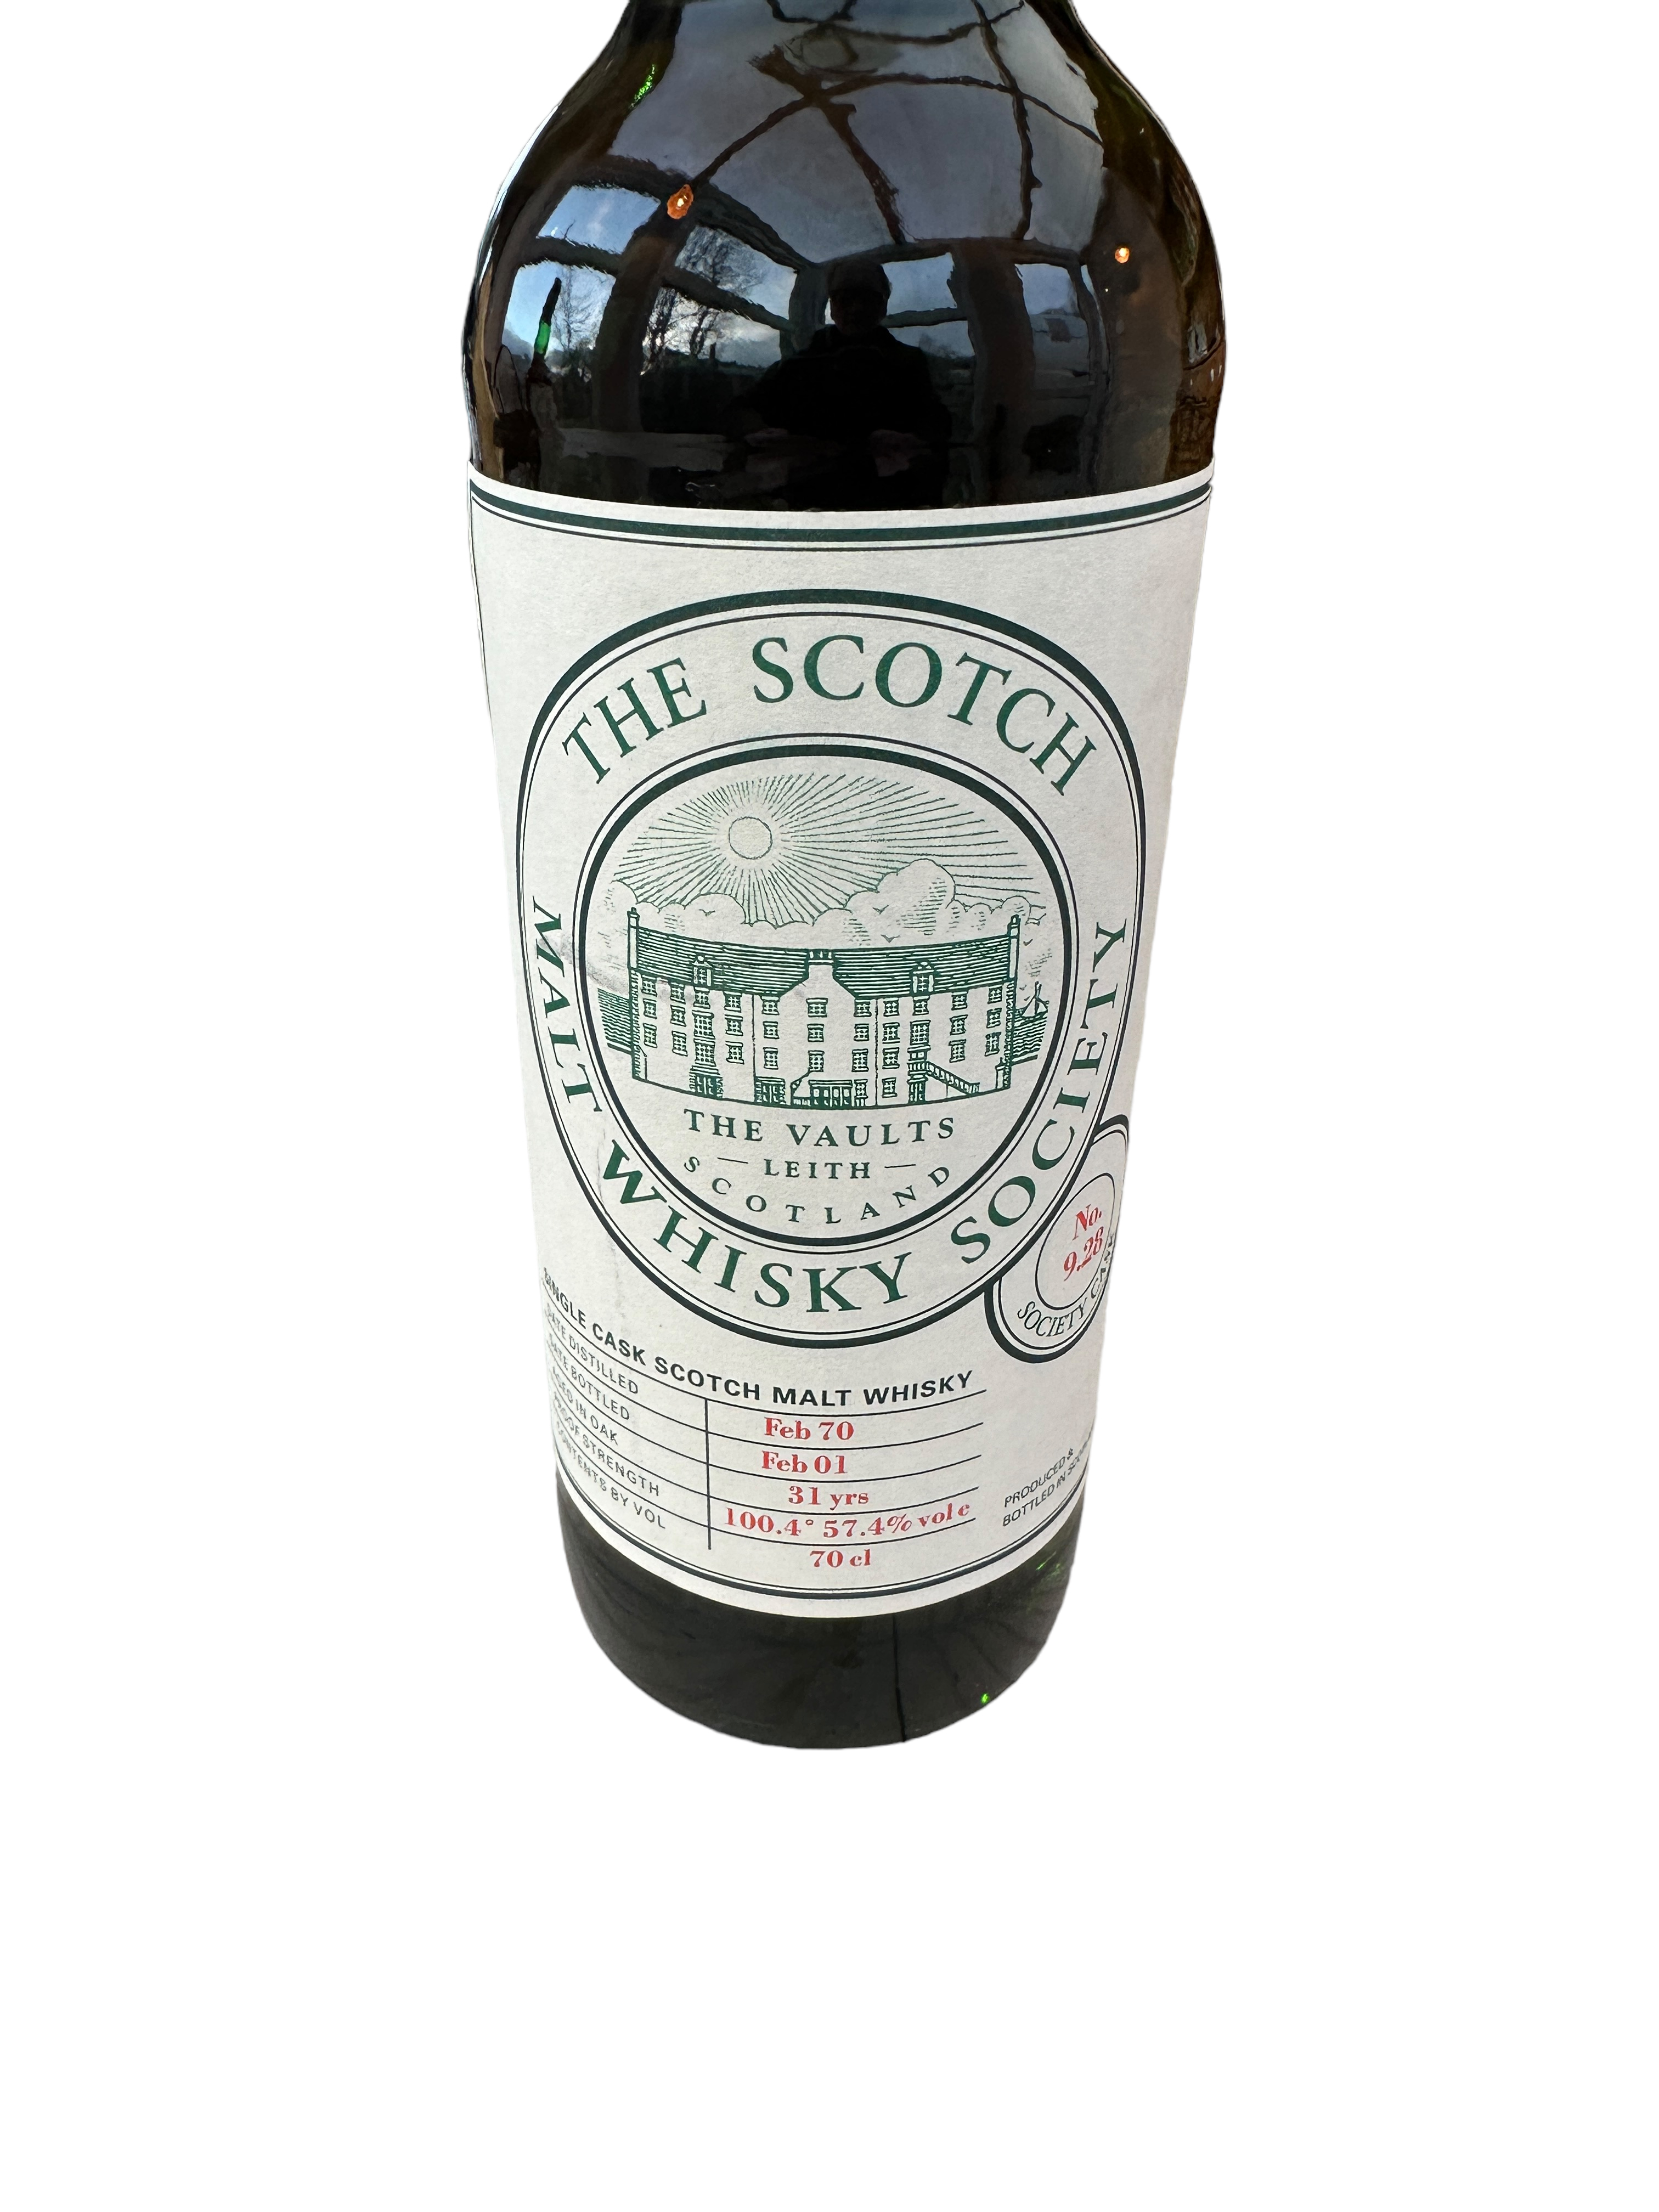 The Scotch Malt Whisky Society - Glen Grant No 9.28 Society Cask Malt Whisky - 31 years old - Image 3 of 9